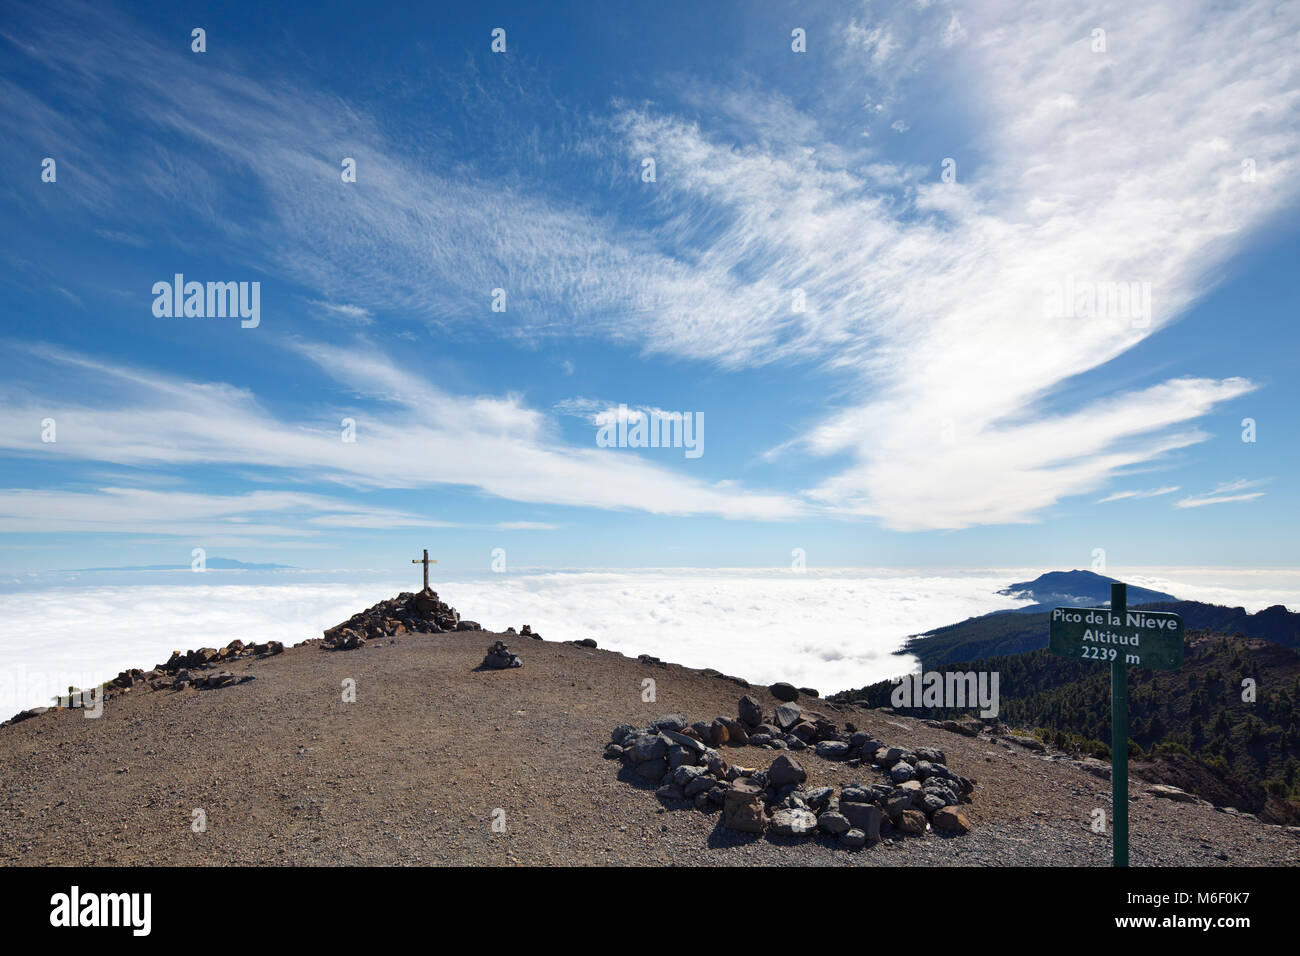 On top of the Pico de la Nieve in La Palma, Spain with view to Tenerife. Stock Photo